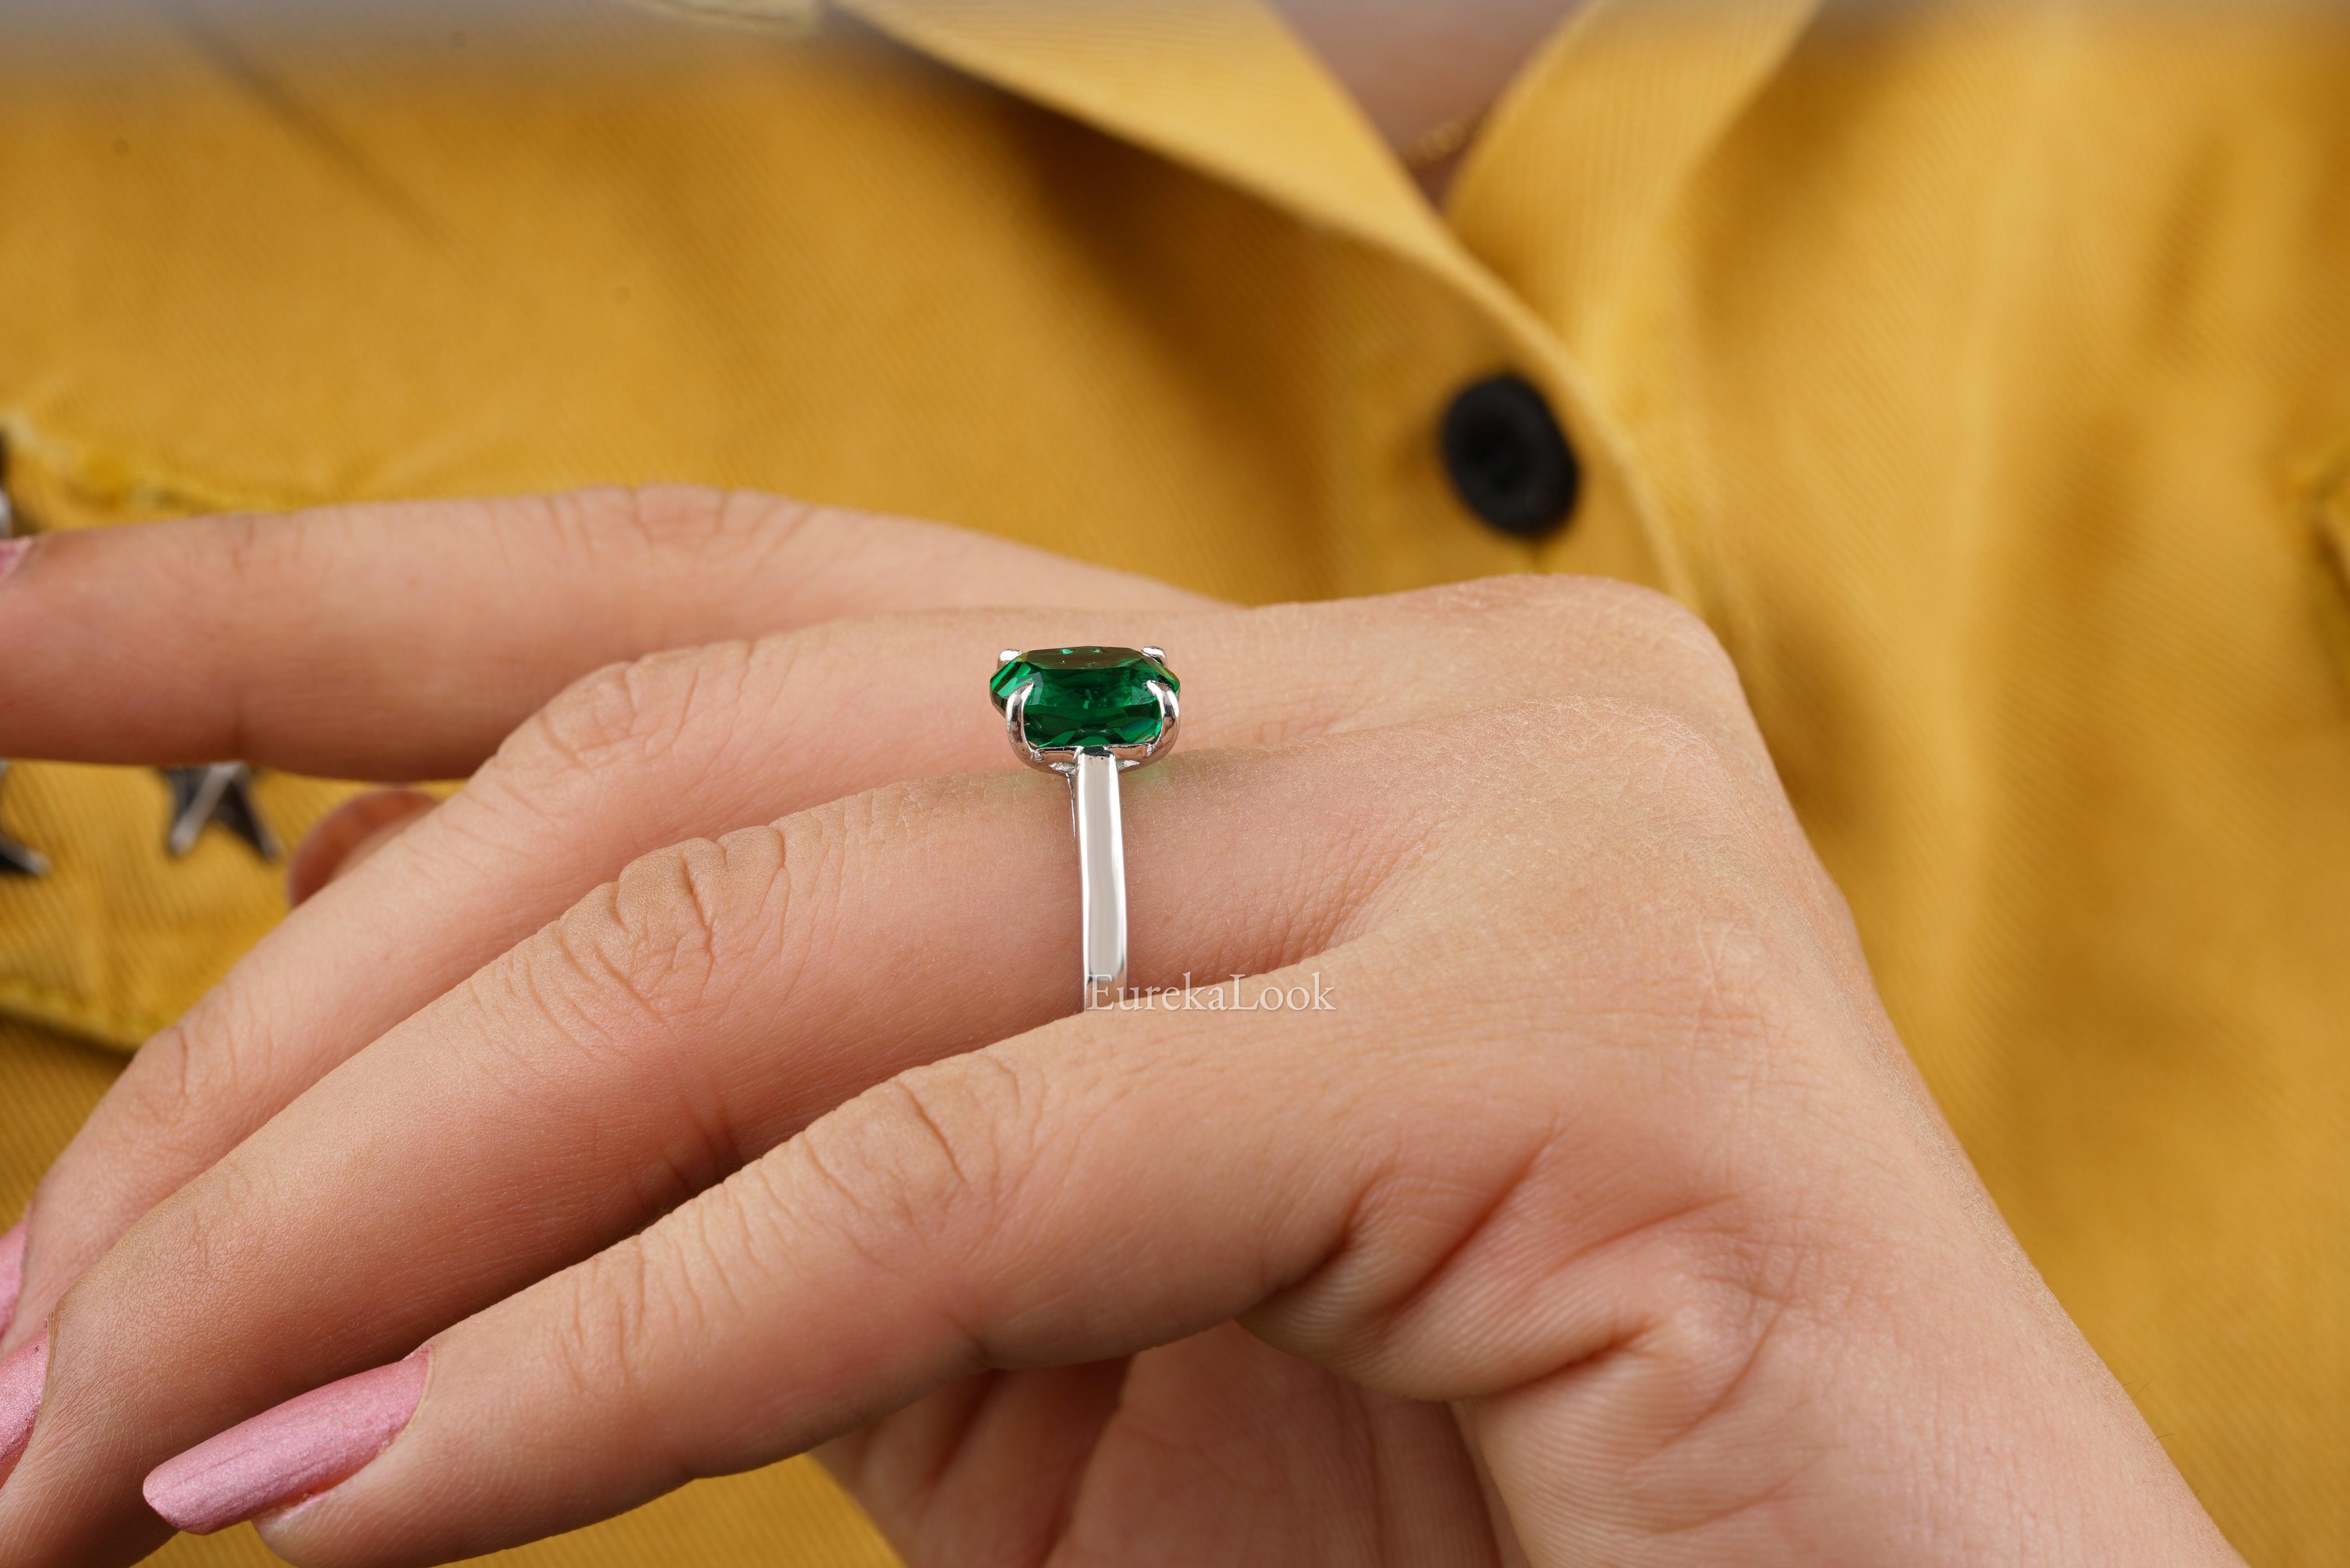 Elongated Cushion Cut Emerald Diamond Engagement Ring - Eurekalook